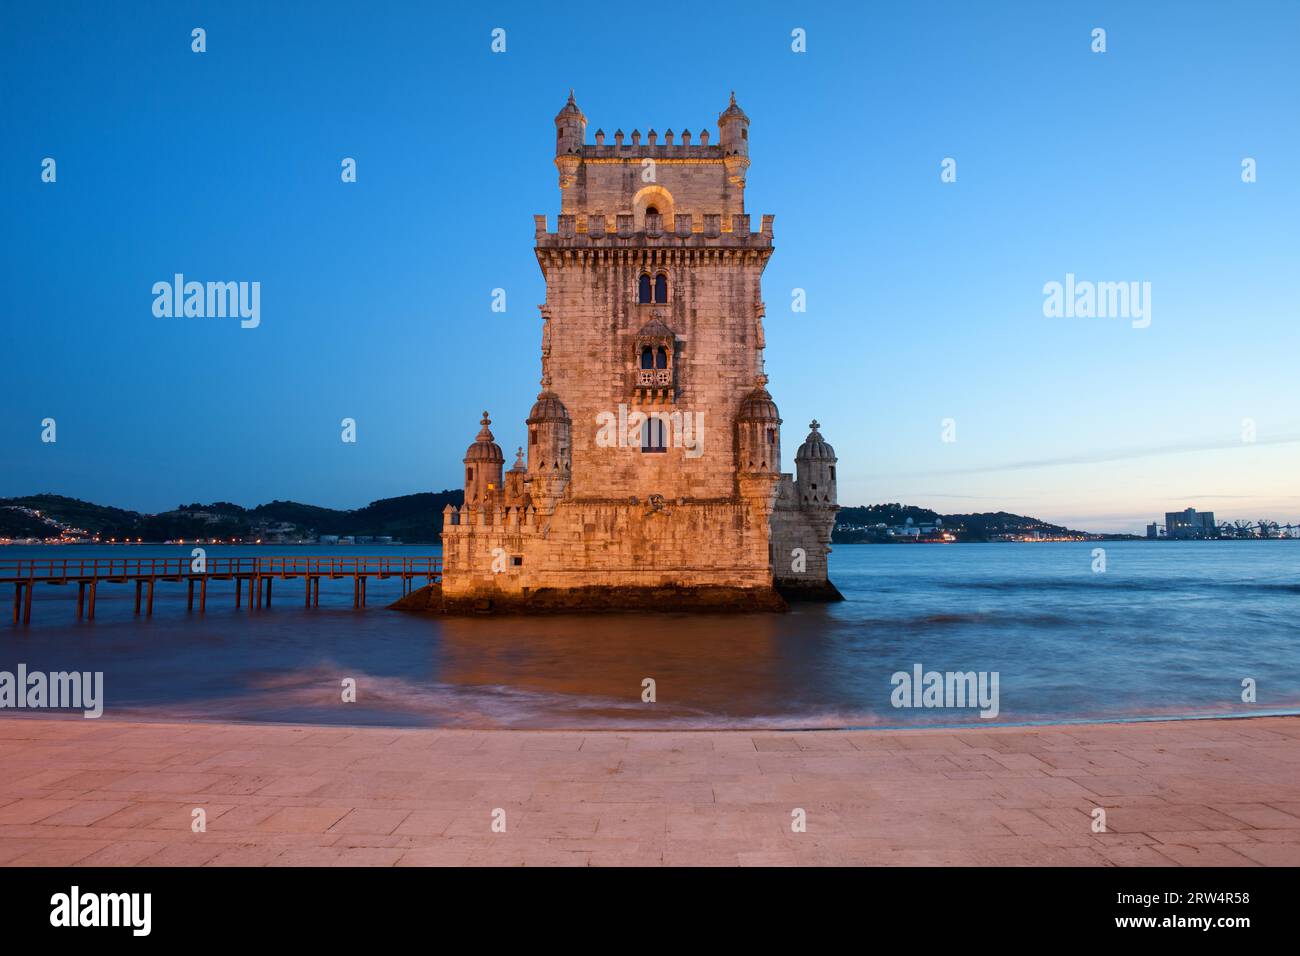 Belem Tower (Portuguese: Torre de Belem) at night in Lisbon, Portugal Stock Photo